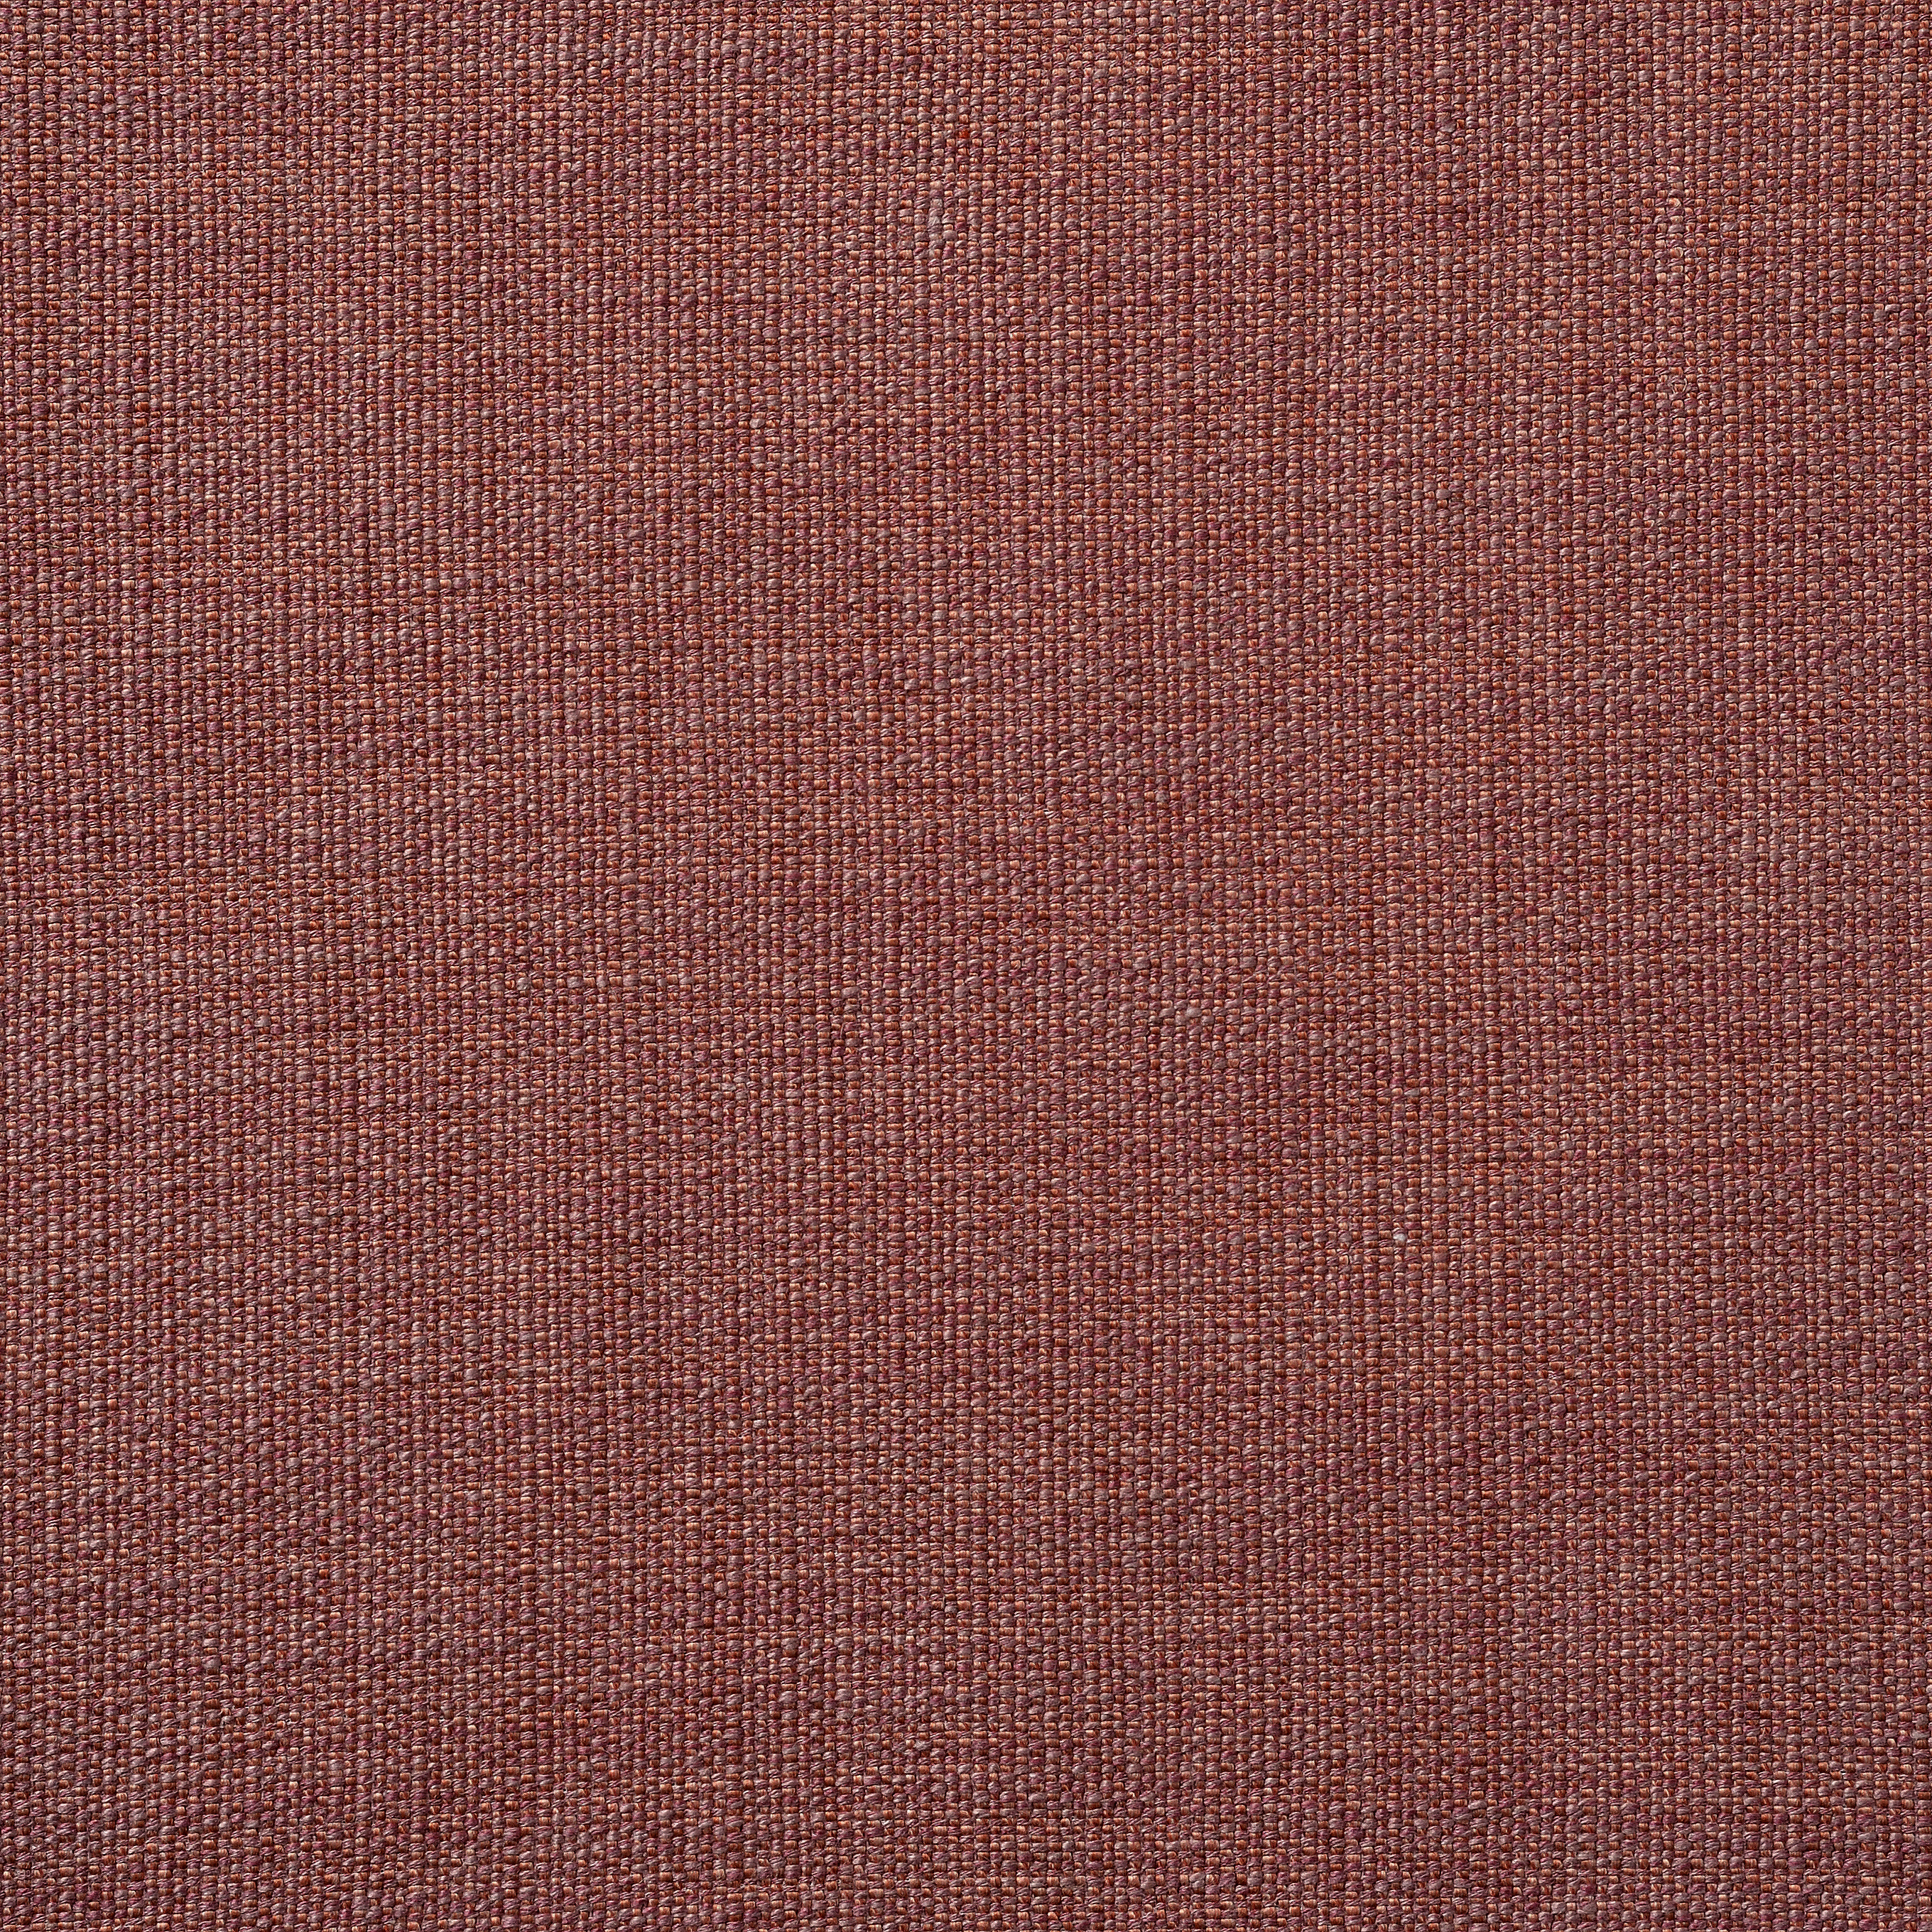 Ashbee Rustic Weave - Blush Marl